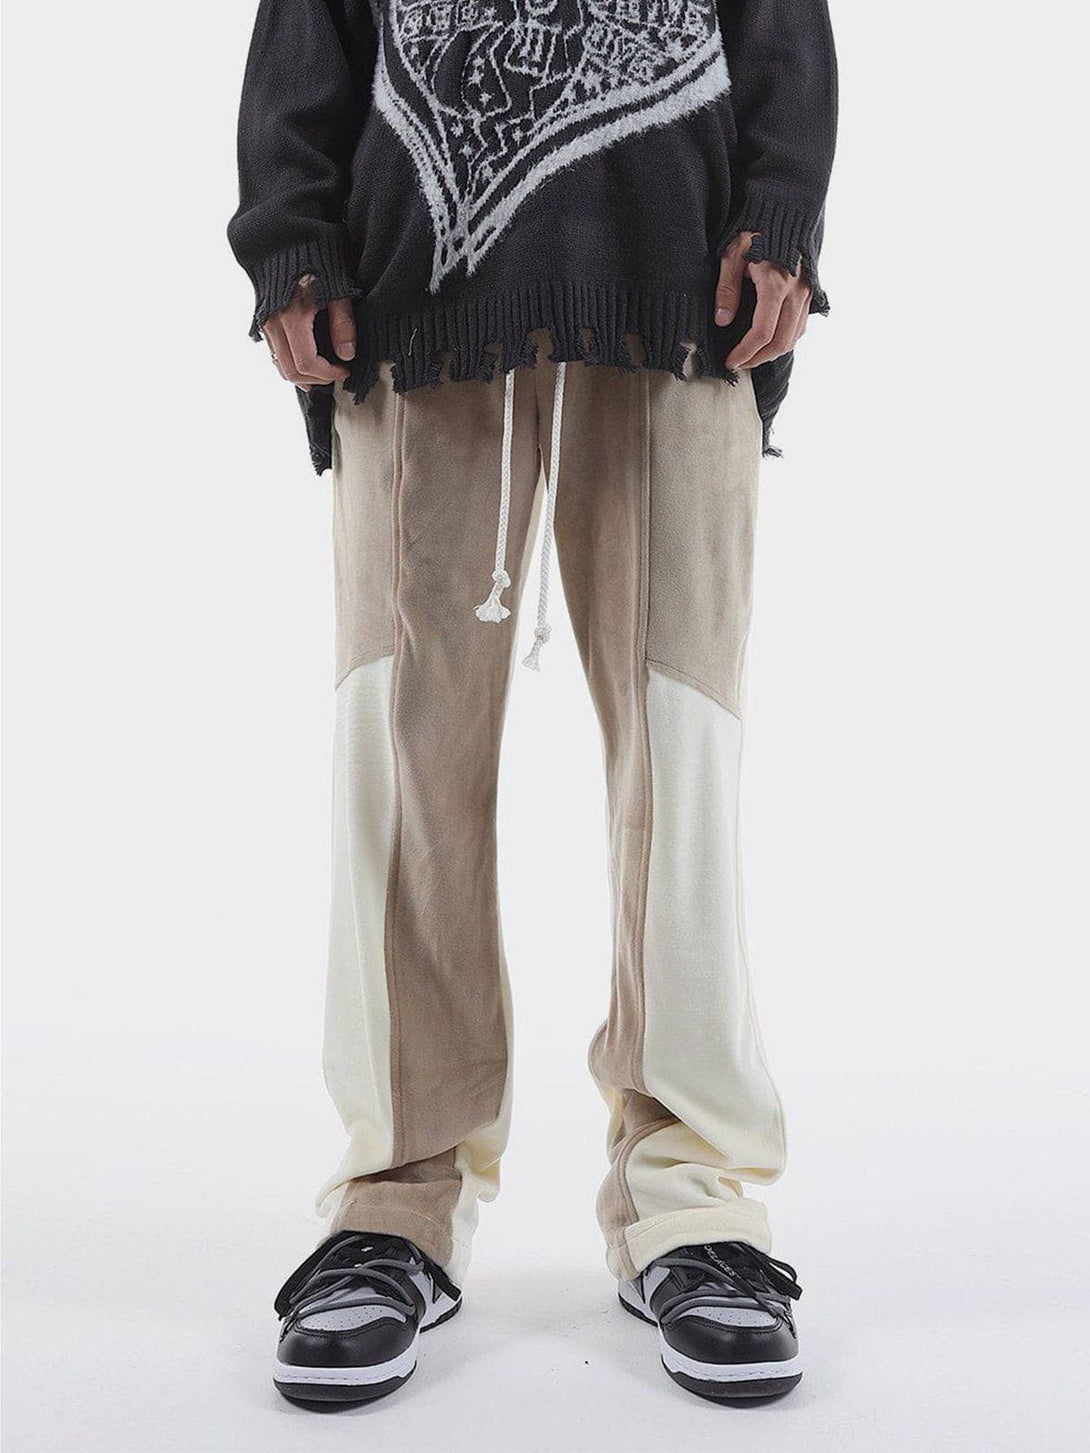 Majesda® - Contrast Drawstring Pants outfit ideas streetwear fashion